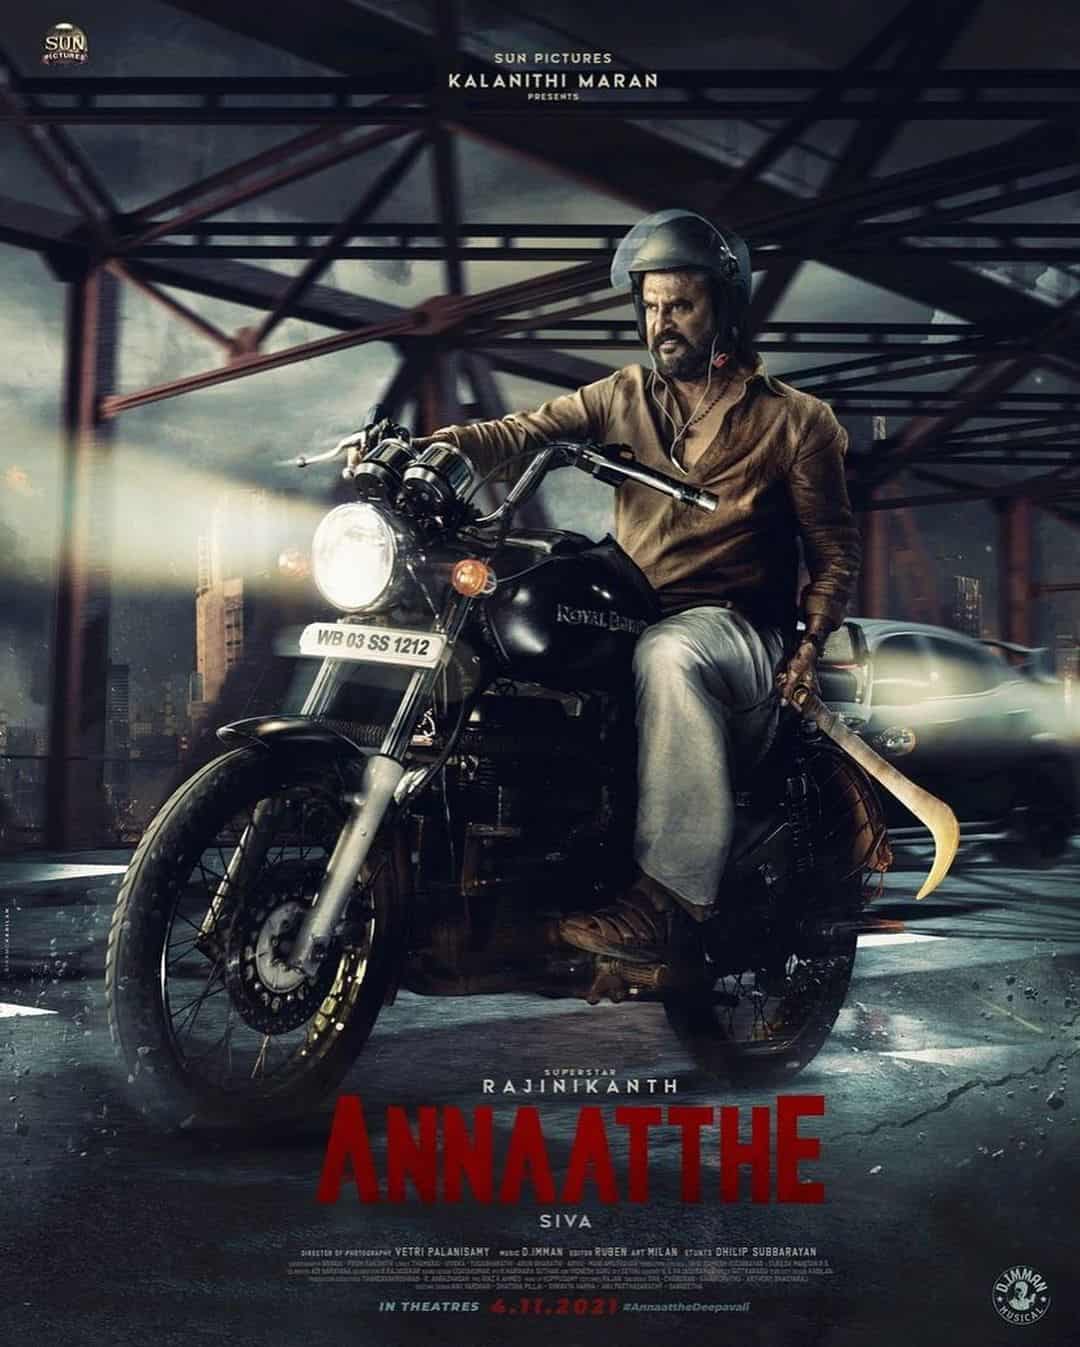 rajinikanth epic character name Annaatthe Trailer siva